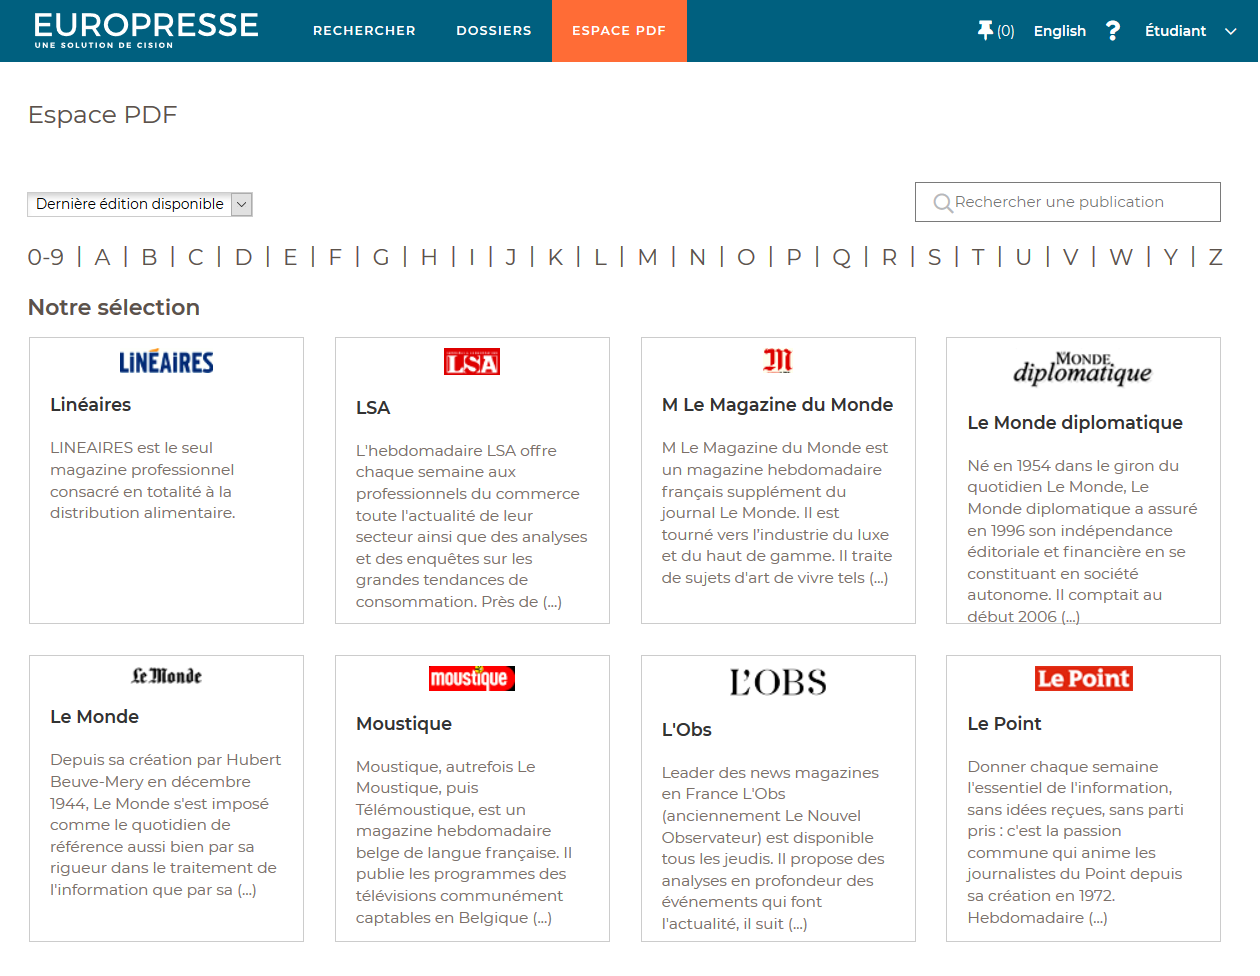 Espace PDF sur Europresse